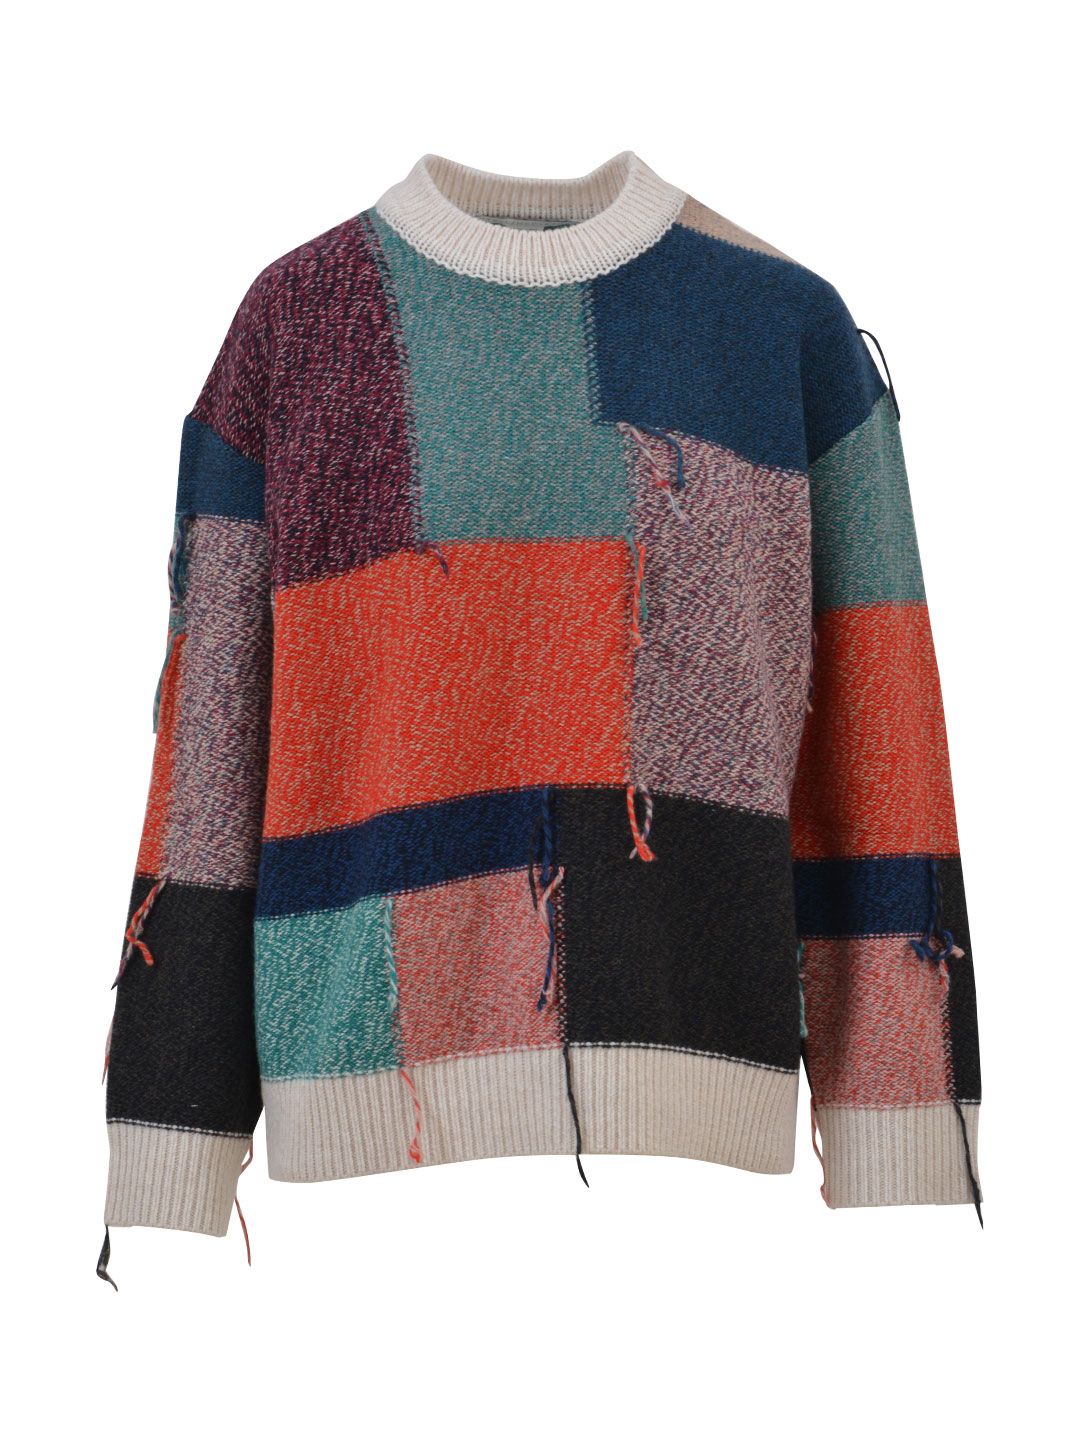 Stella McCartney - Stella McCartney Patchwork Sweater - Multicolor ...